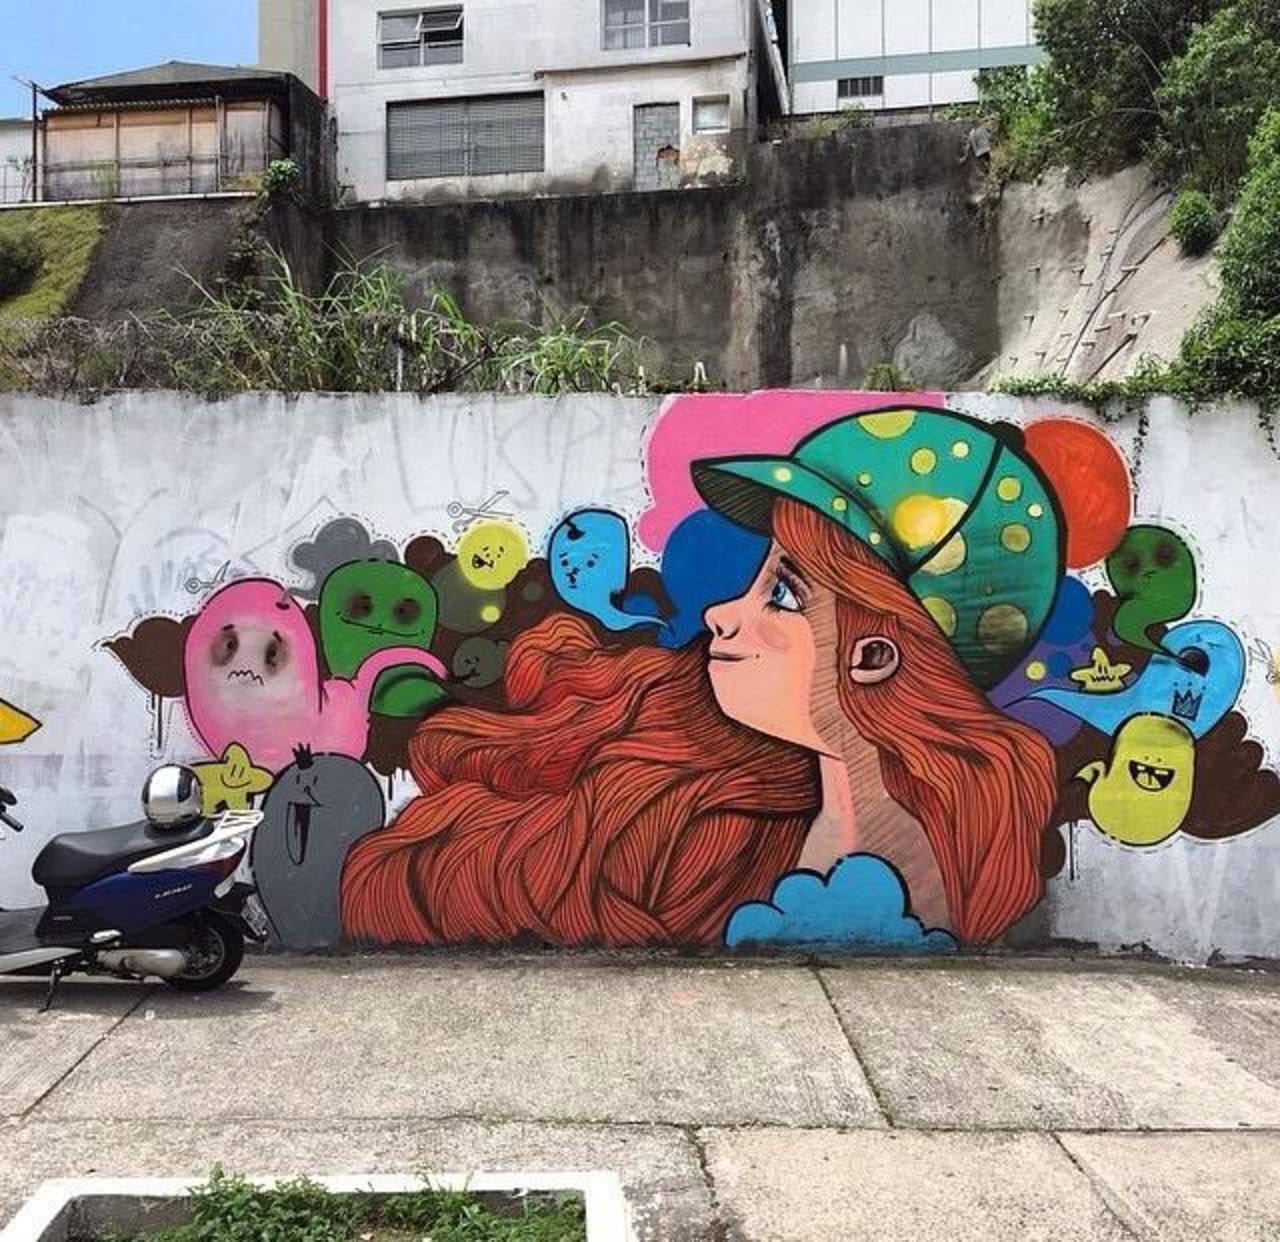 Endearing Street Art by Vupulos in São Paulo, Brazil 

#art #mural #graffiti #streetart http://t.co/X2VC0IdevL